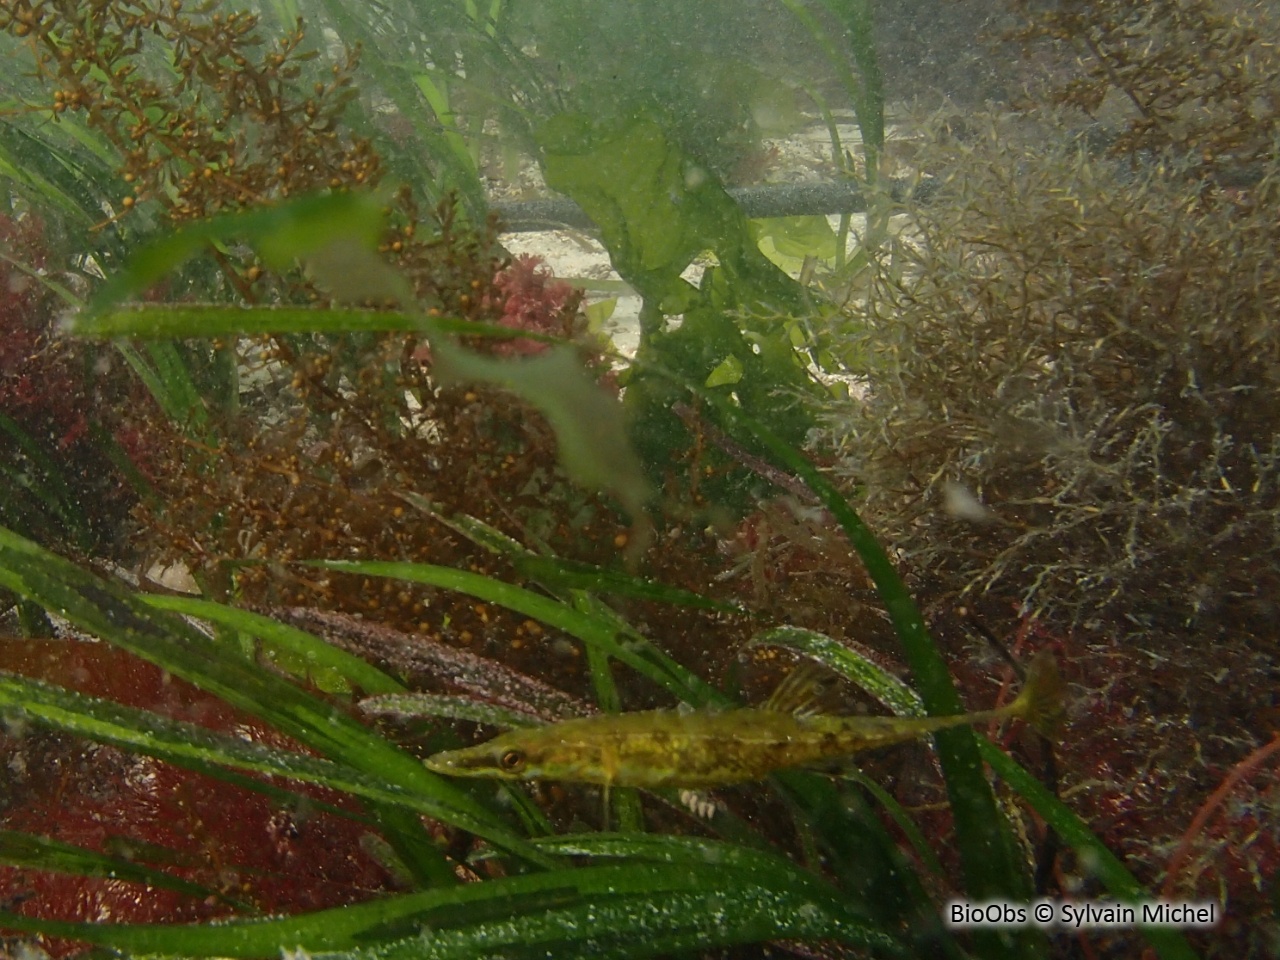 Épinoche de mer - Spinachia spinachia - Sylvain Michel - BioObs